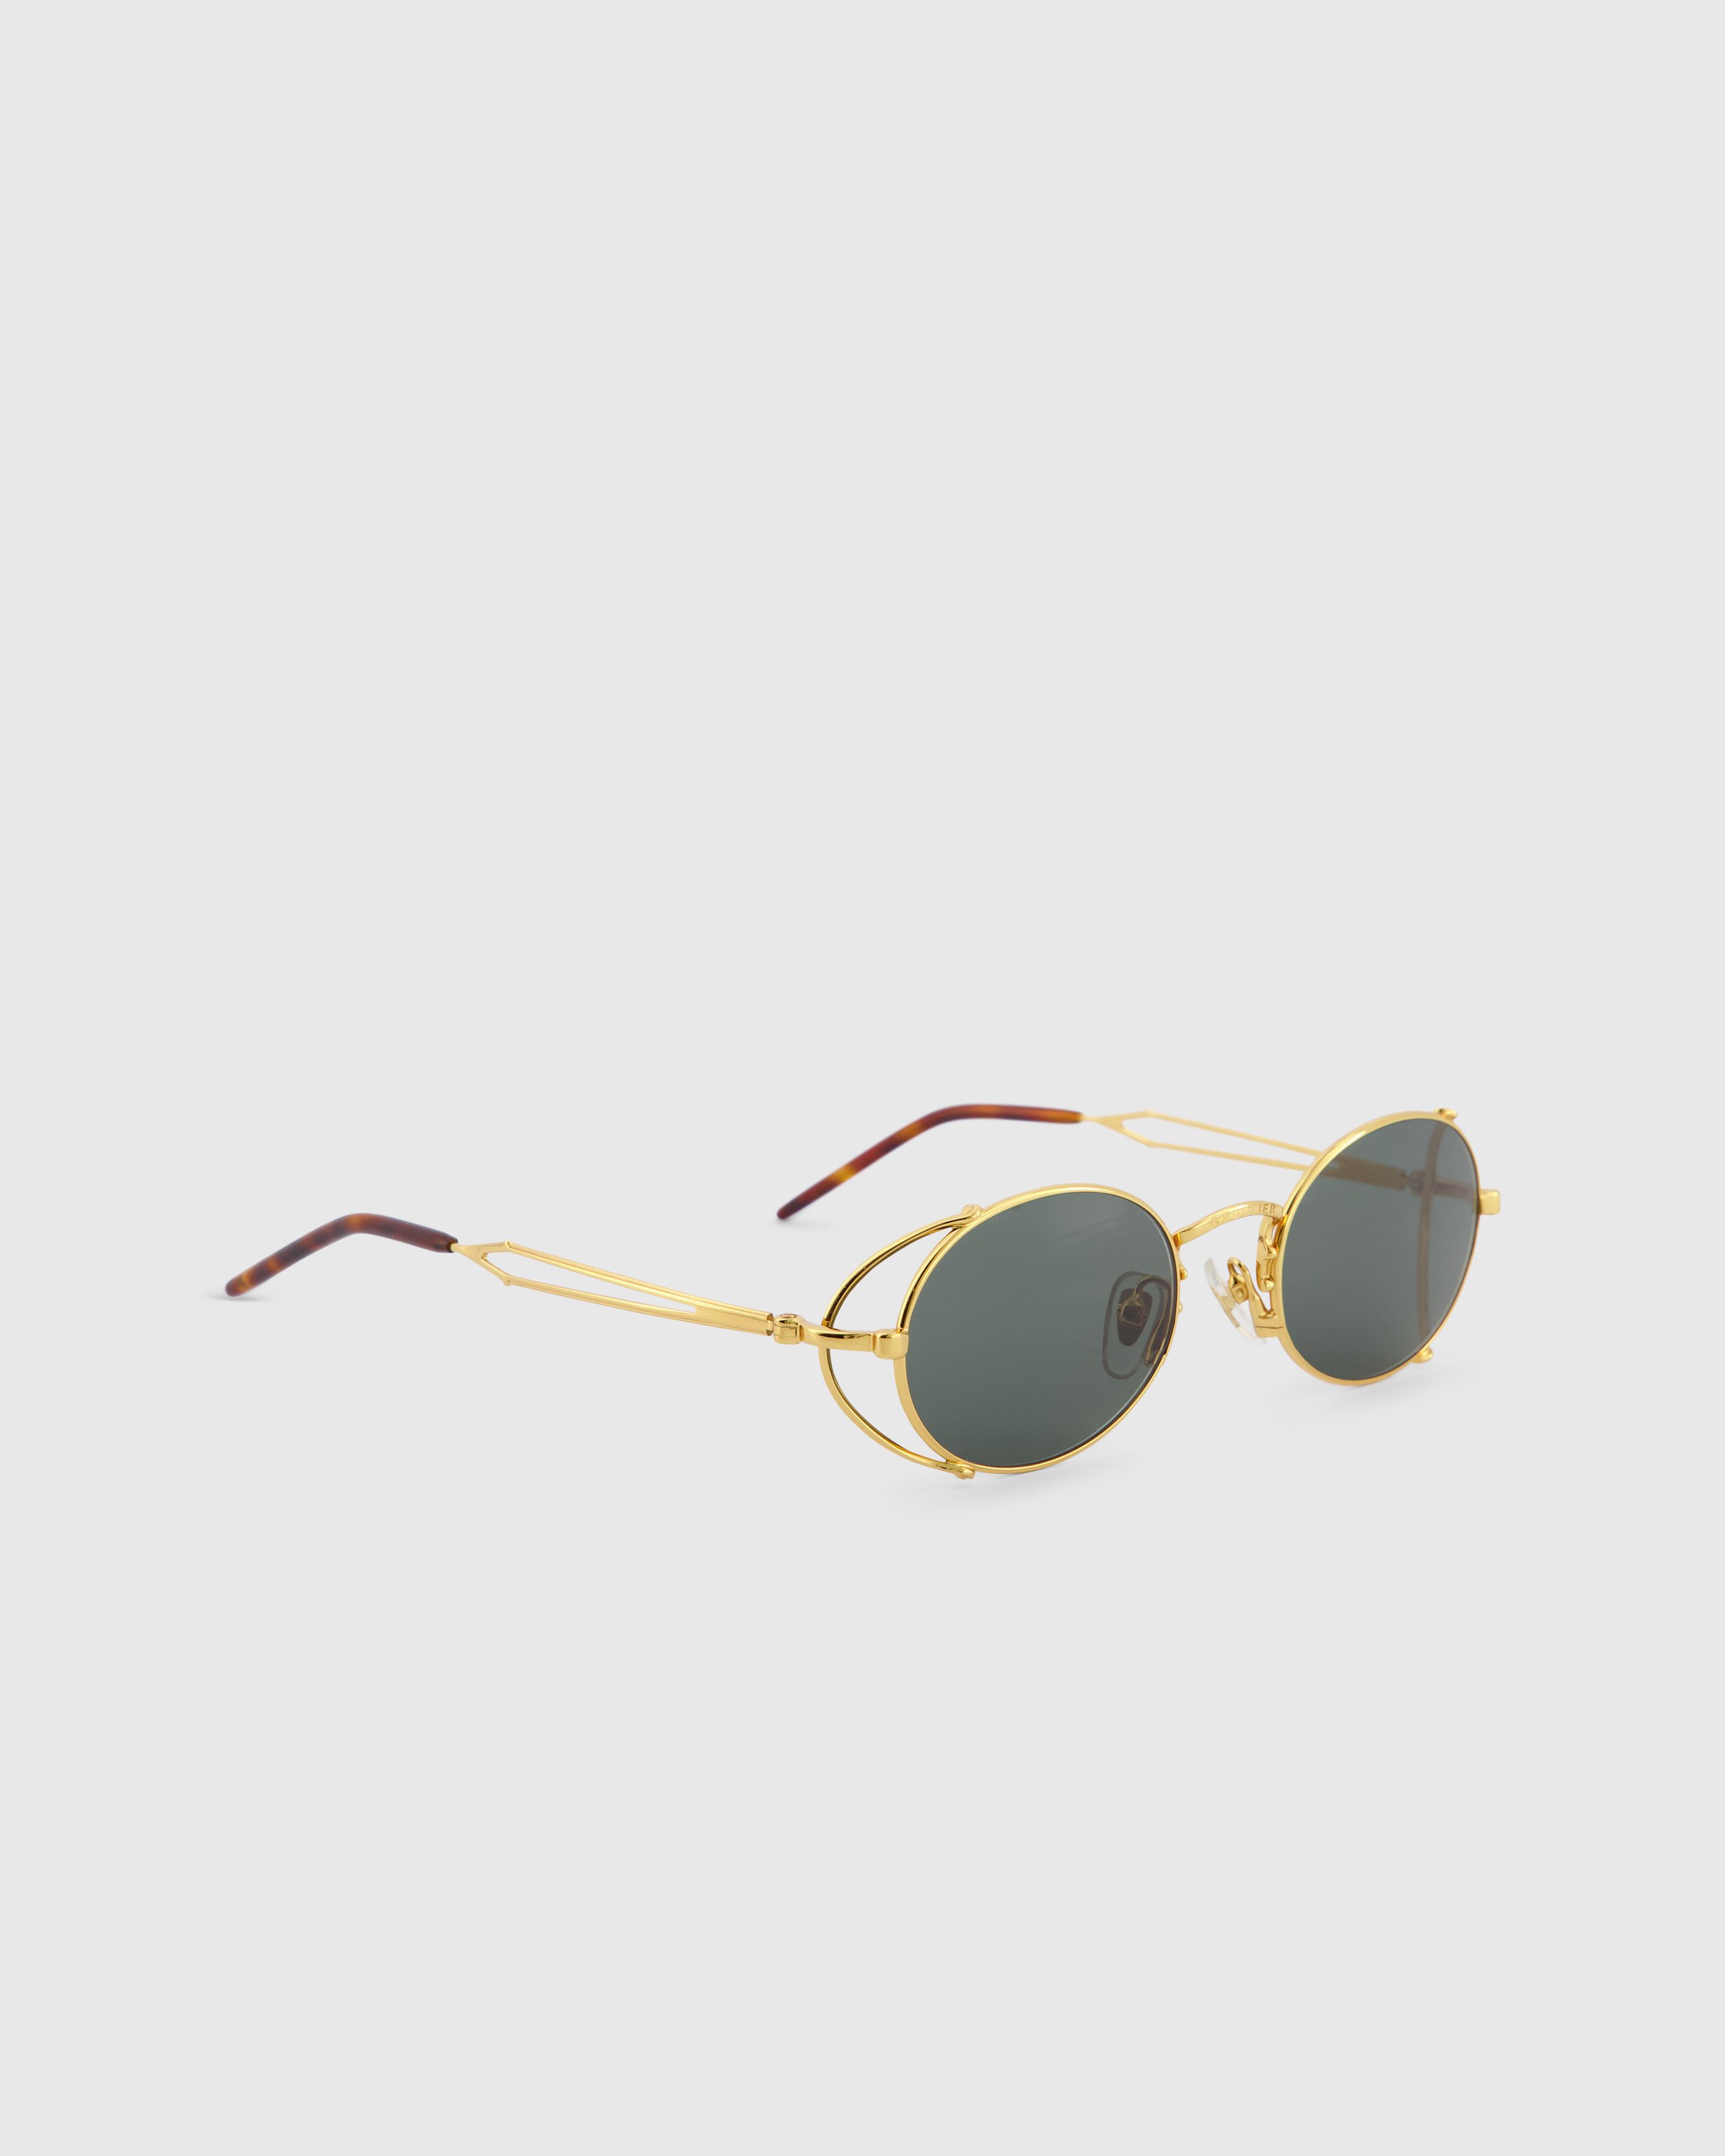 Jean Paul Gaultier x Burna Boy - 55-3175 Arceau Sunglasses Yellow - Accessories - Yellow - Image 2